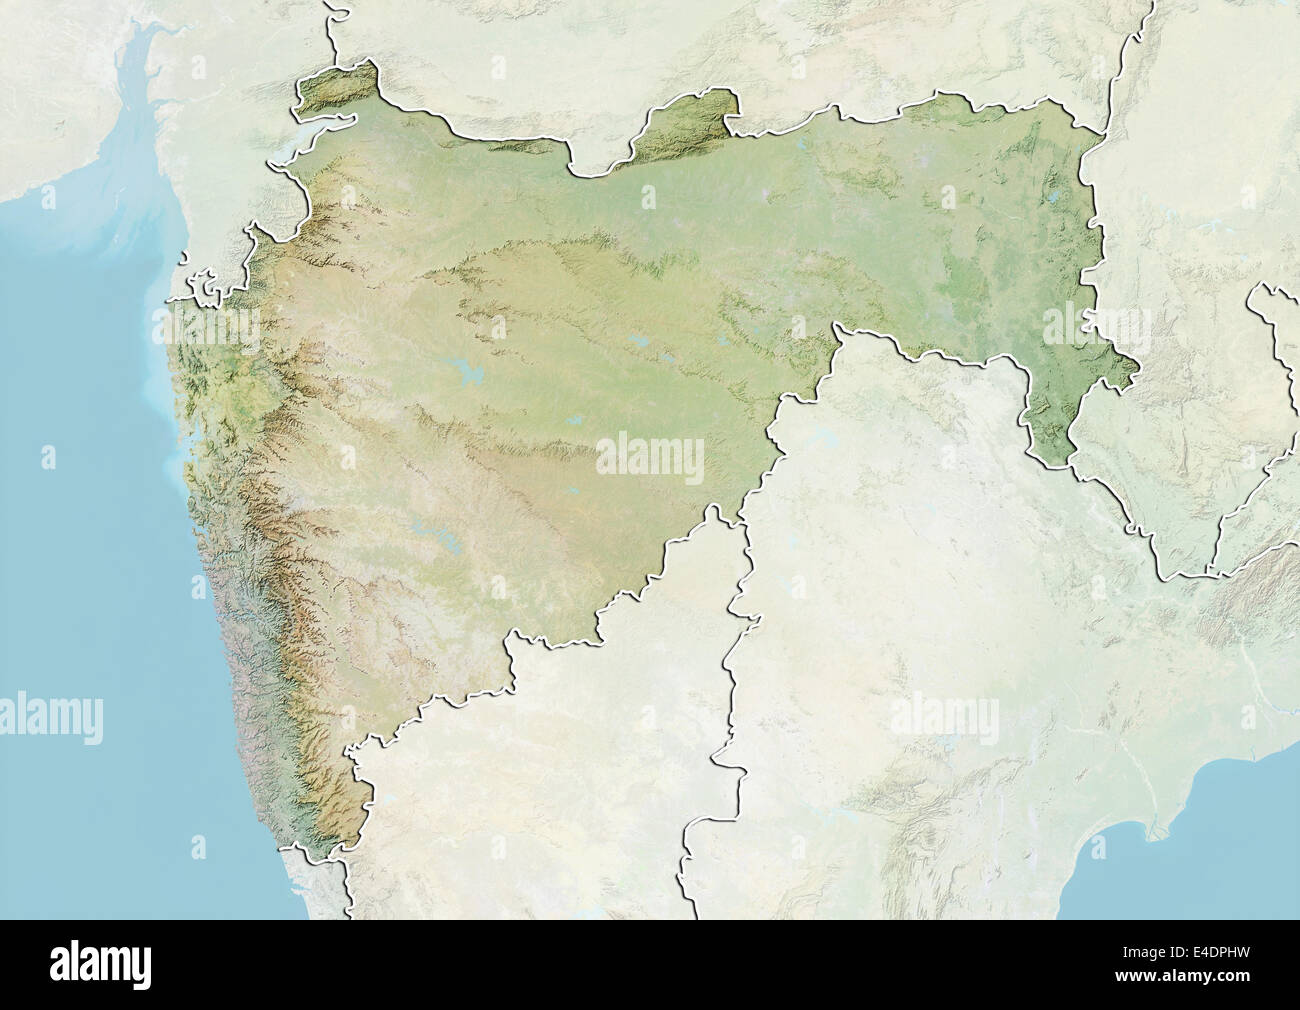 Etat de Maharashtra, Inde, carte en relief Banque D'Images